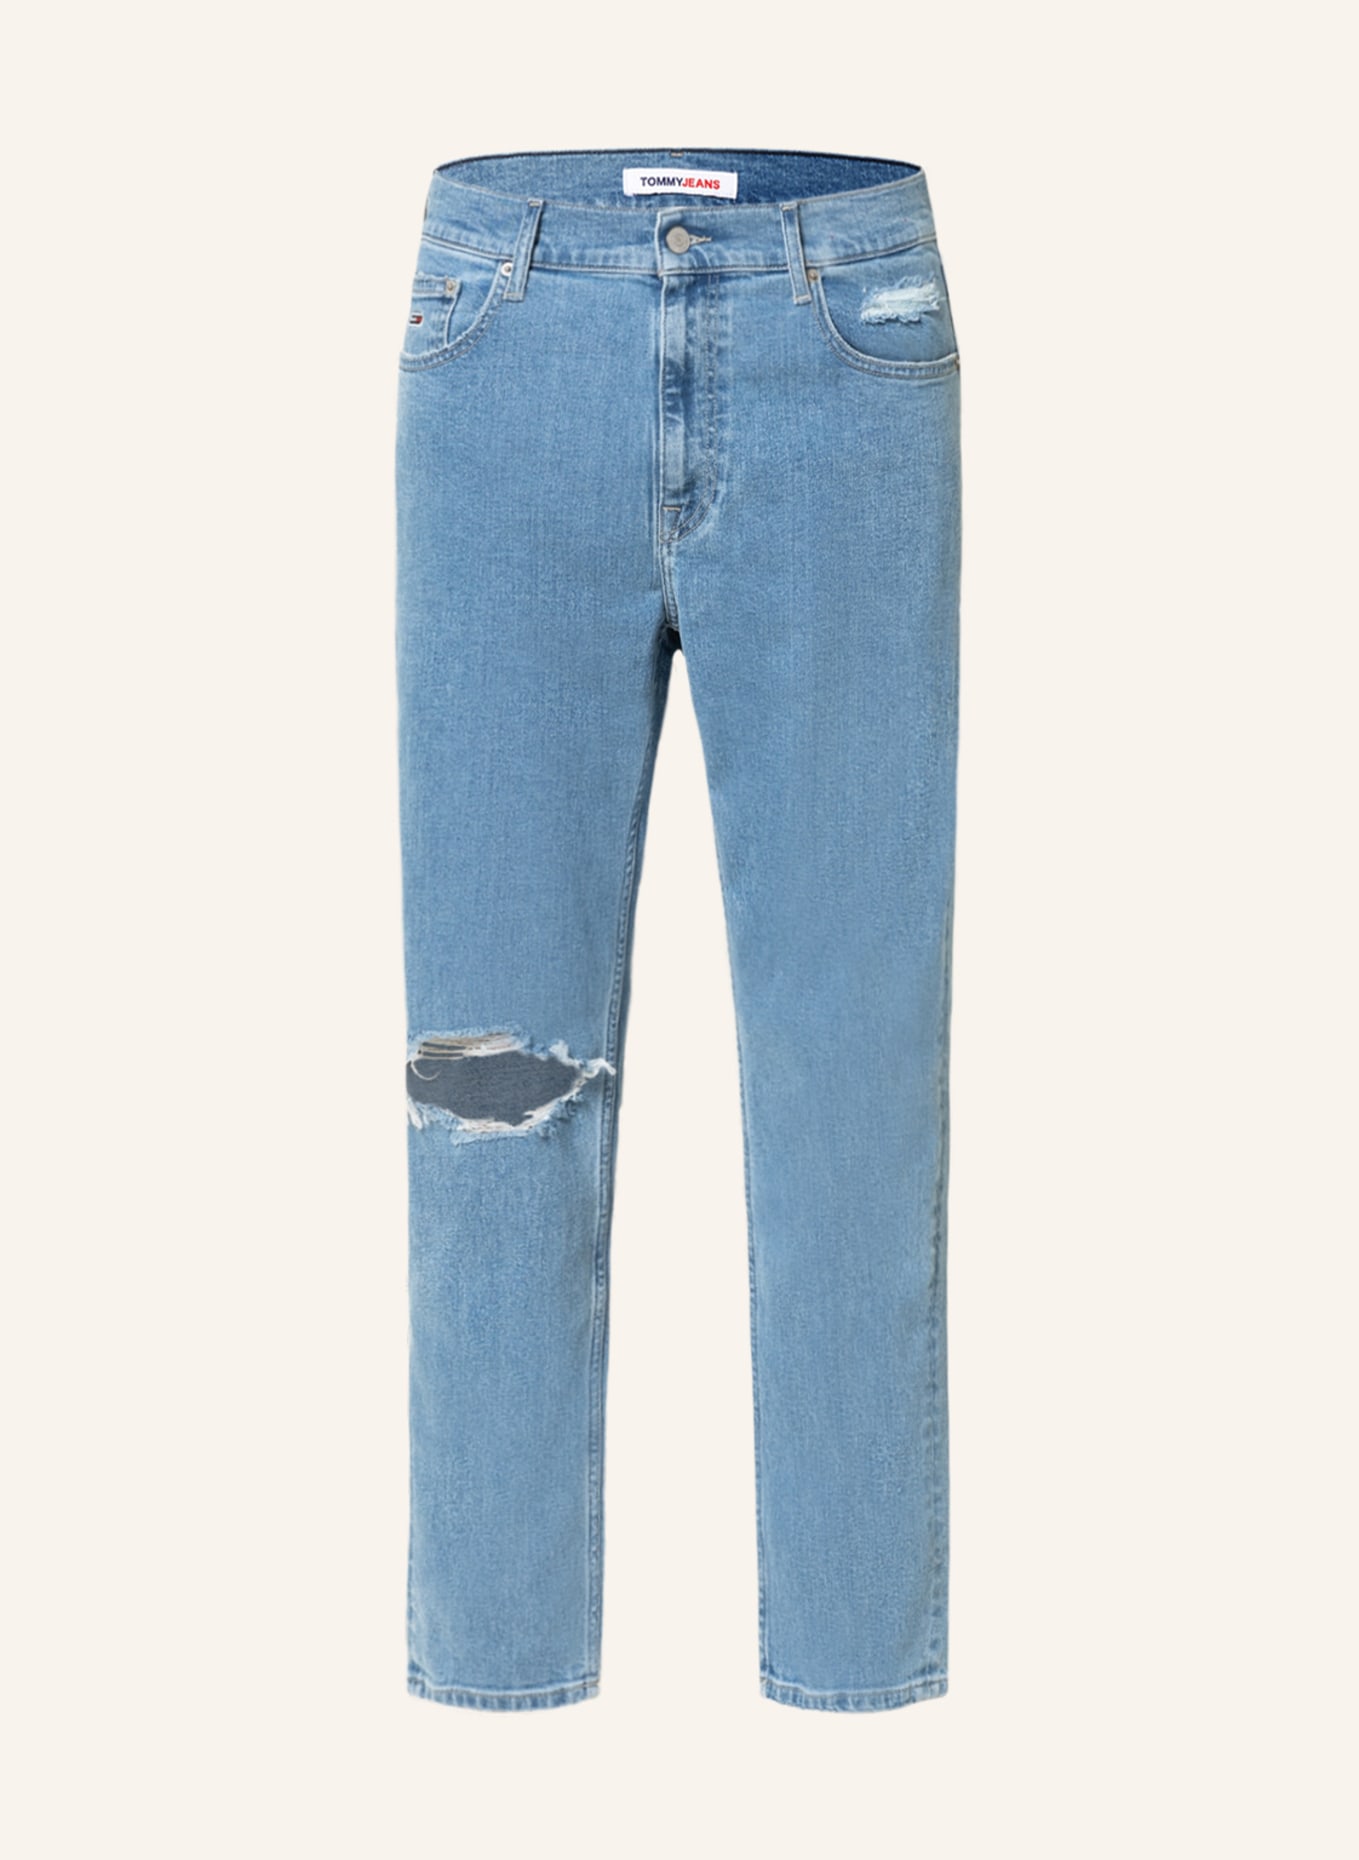 TOMMY JEANS Destroyed Jeans DAD JEAN Regular Tapered Fit , Farbe: 1AB Denim Light (Bild 1)